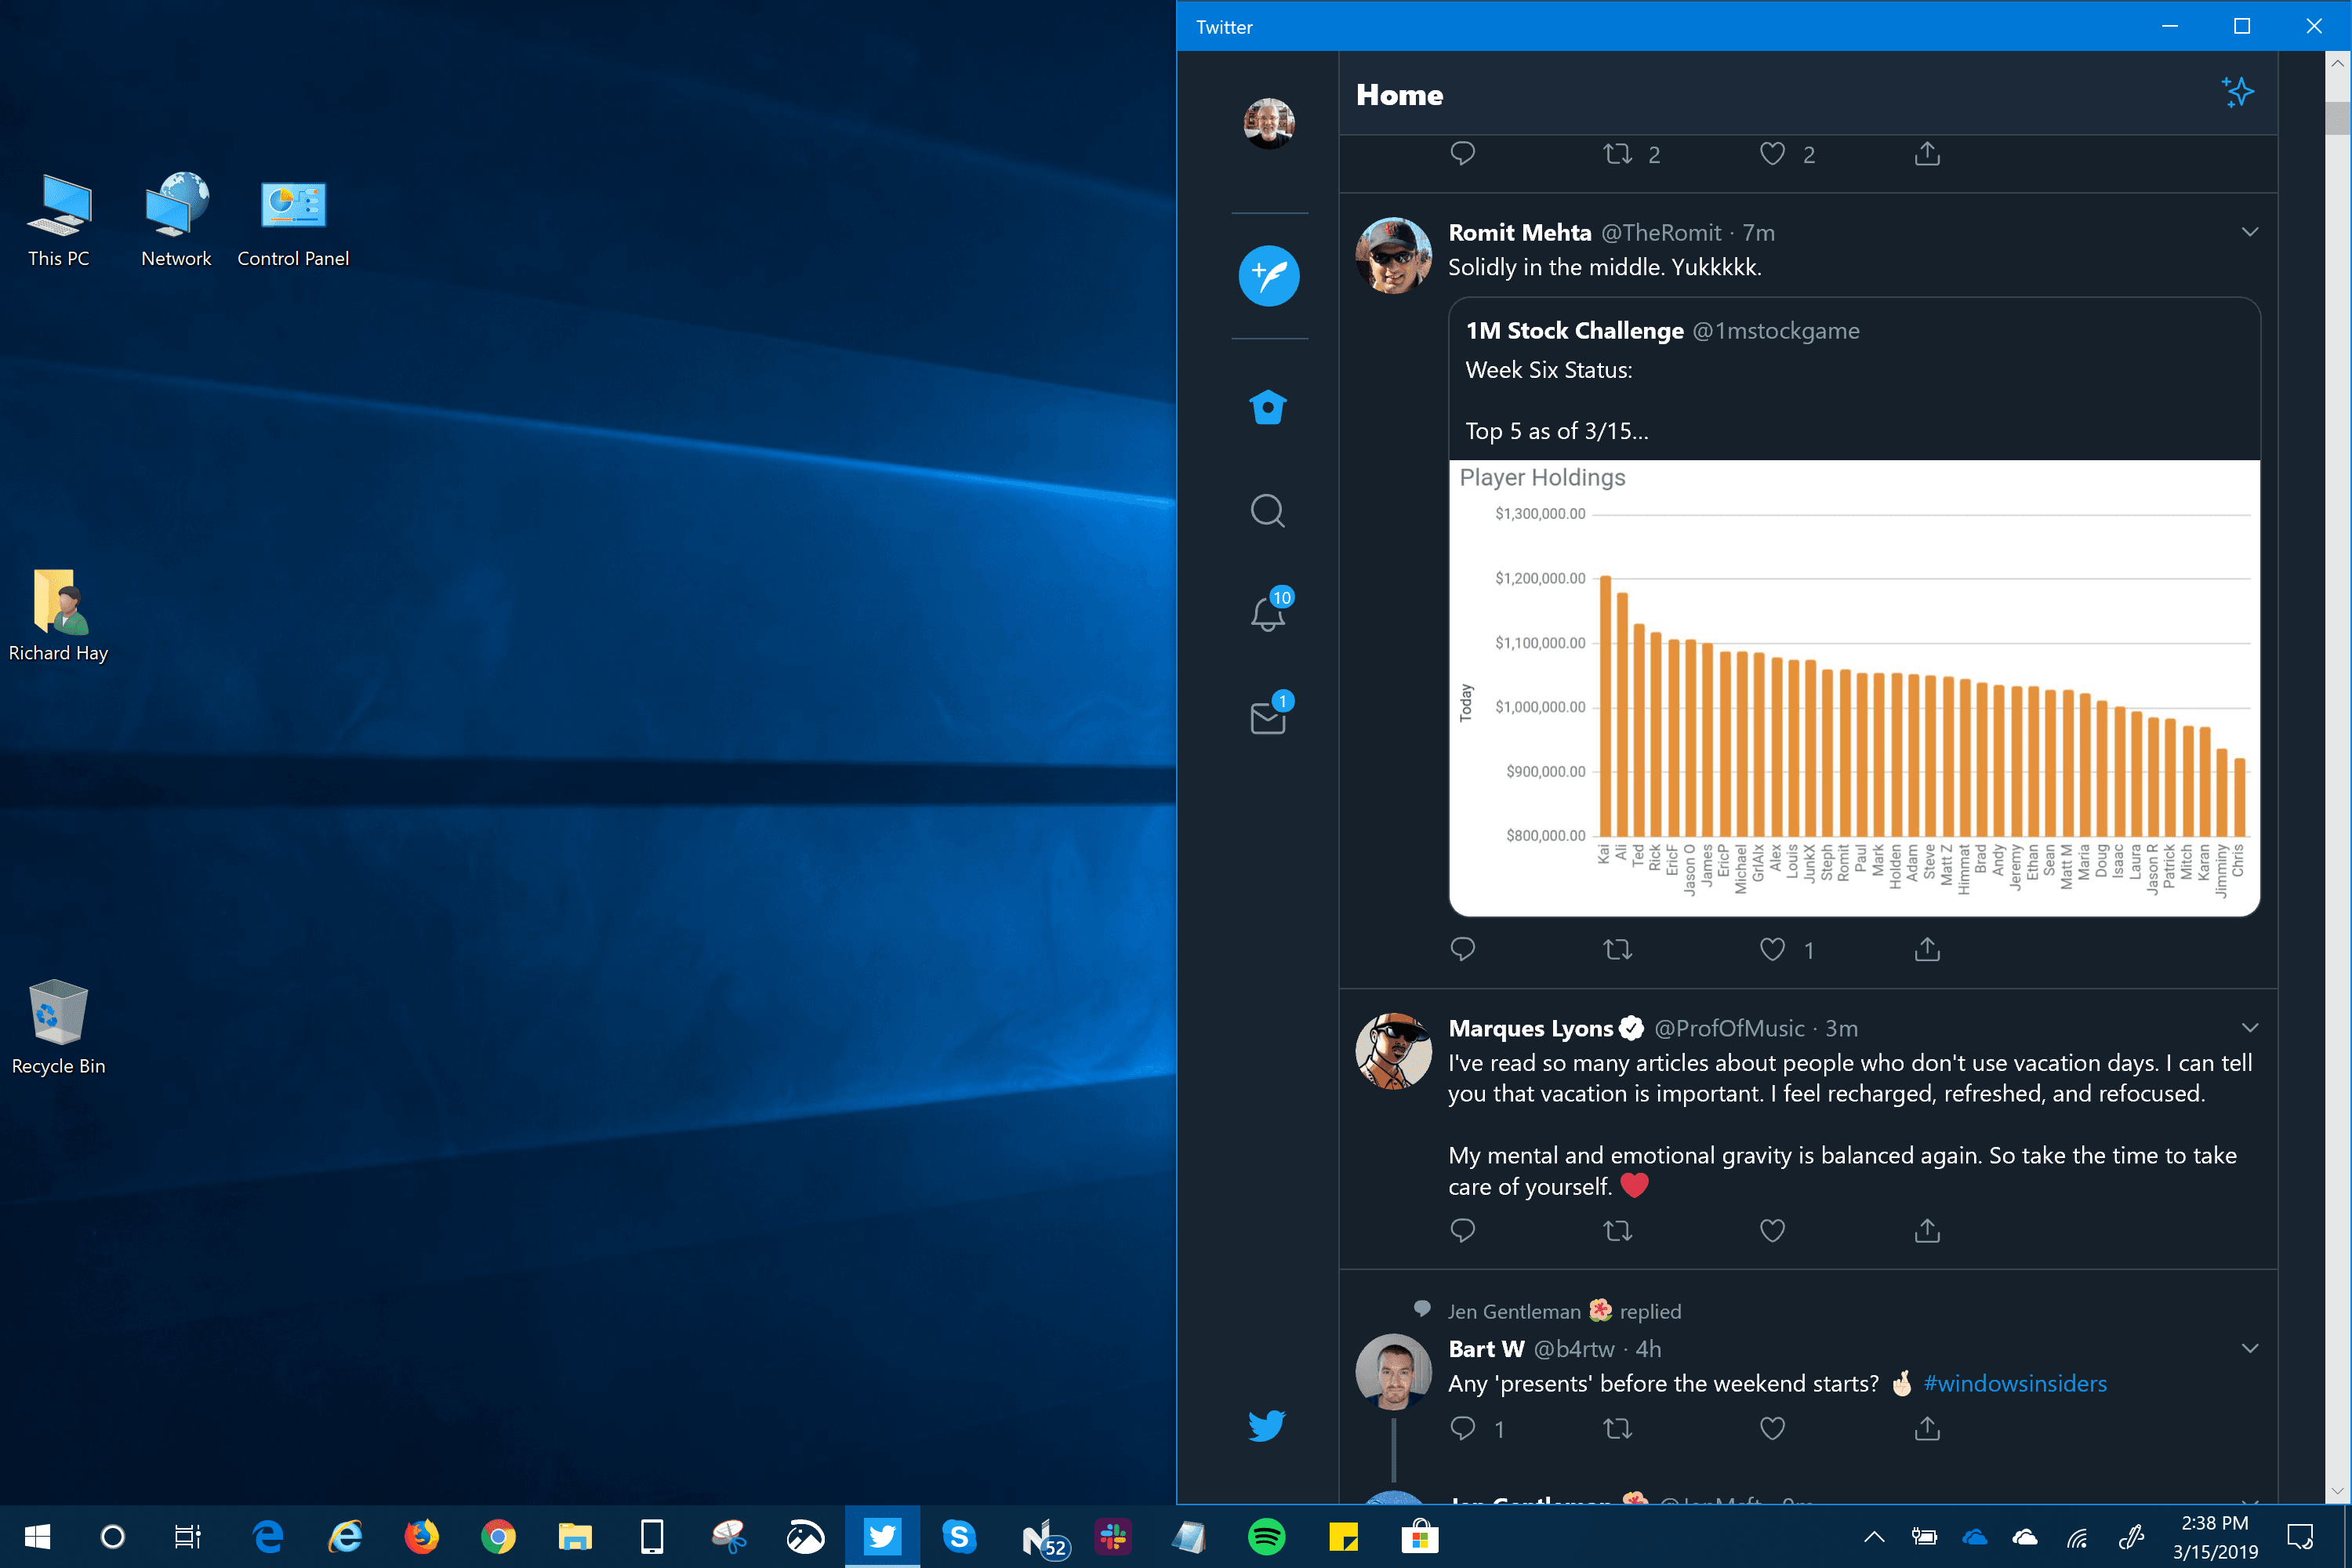 Windows 10 Twitter App - Snapped